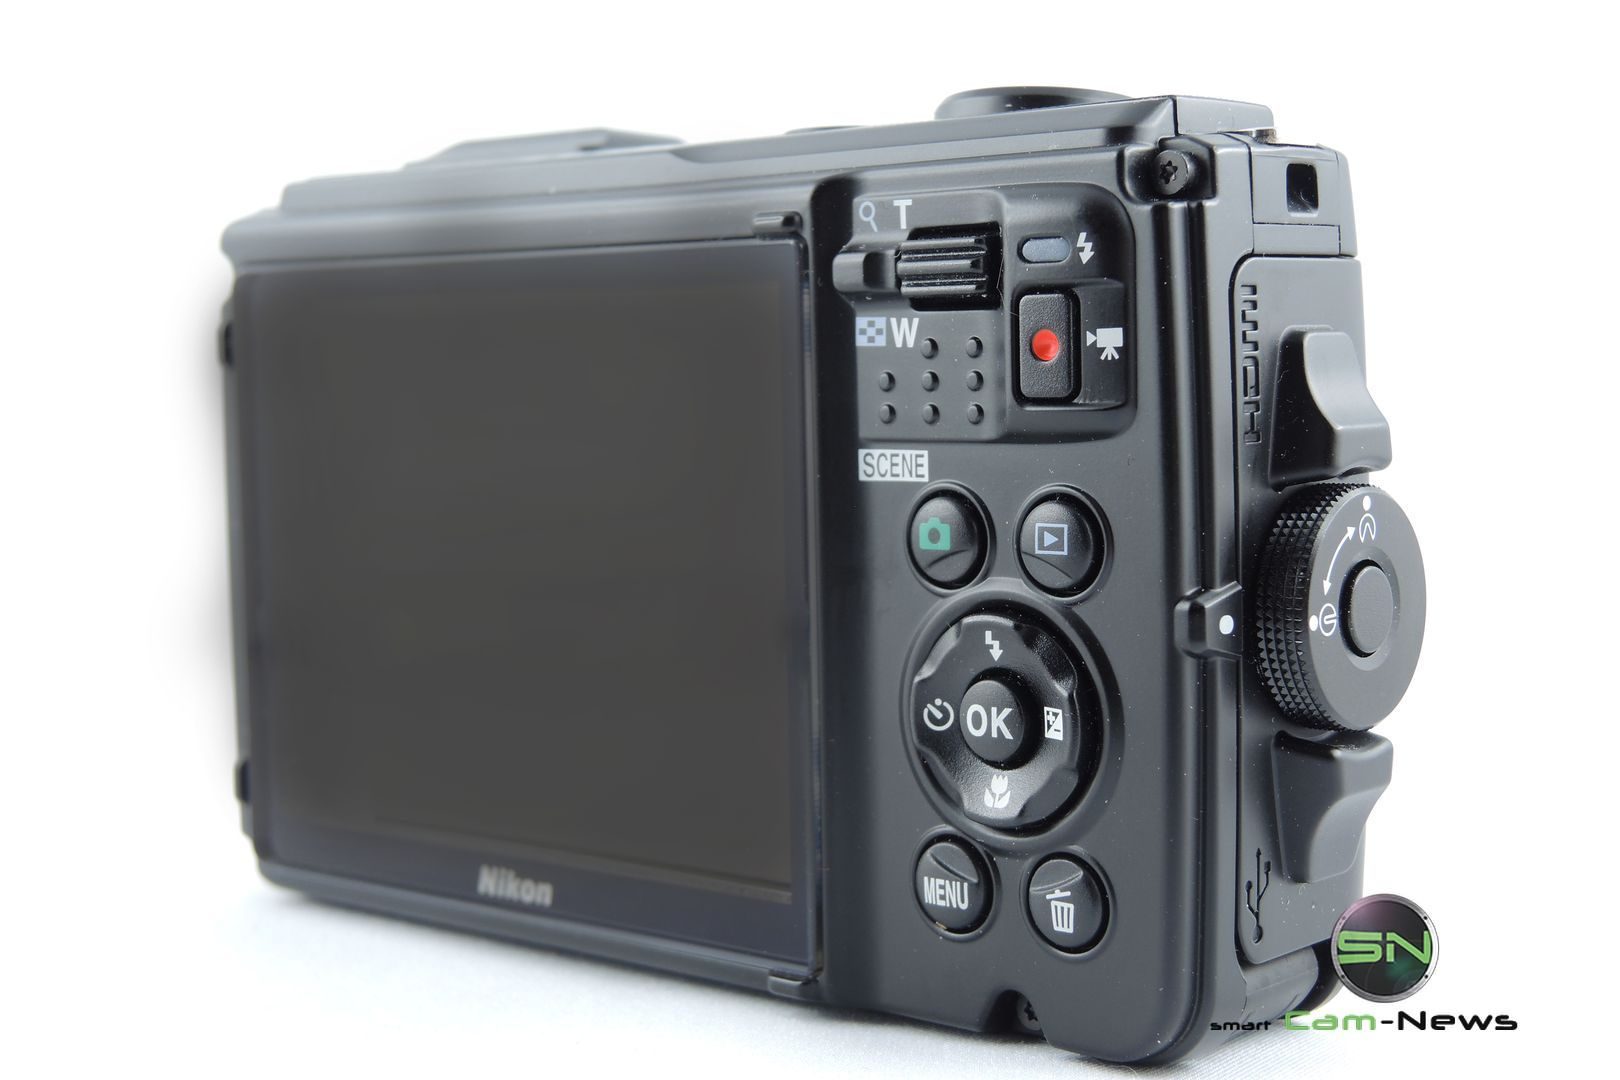 Bedienfeld - Nikon W300 Outdoor Kamera - SmartCamNews